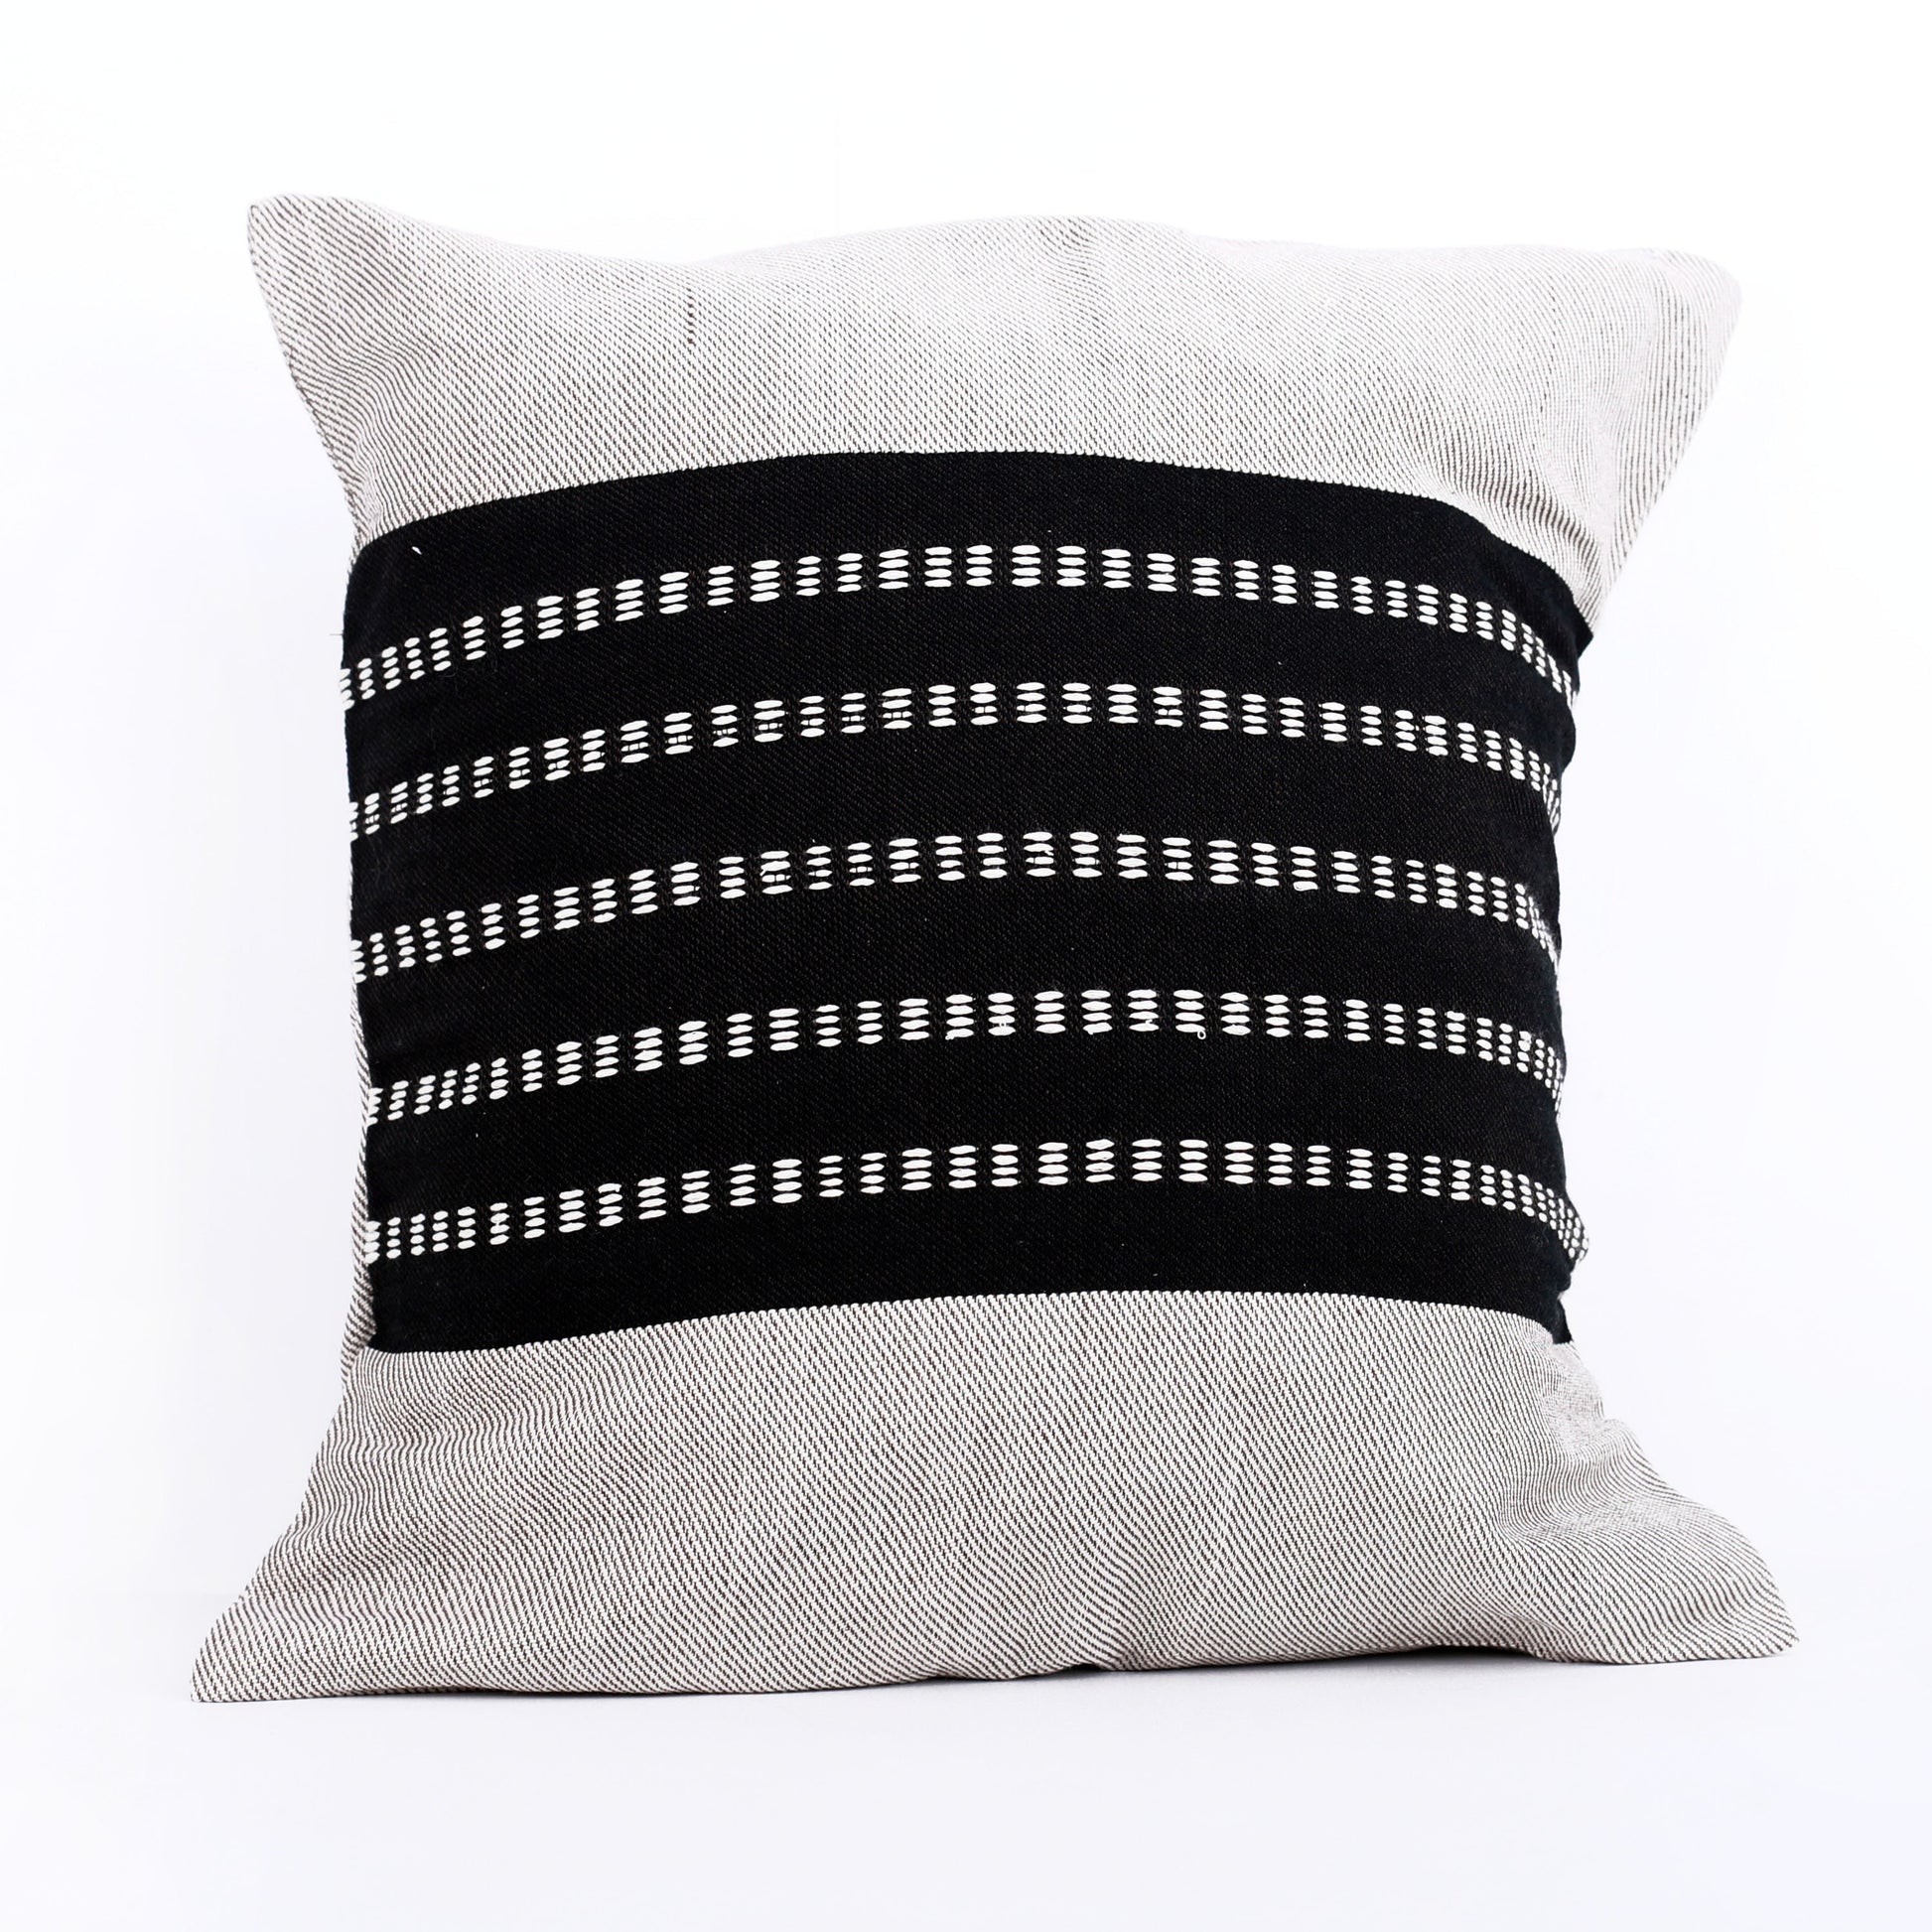 African cushions Cushion covers Cultural cushions ሀበሻ 6 pieces